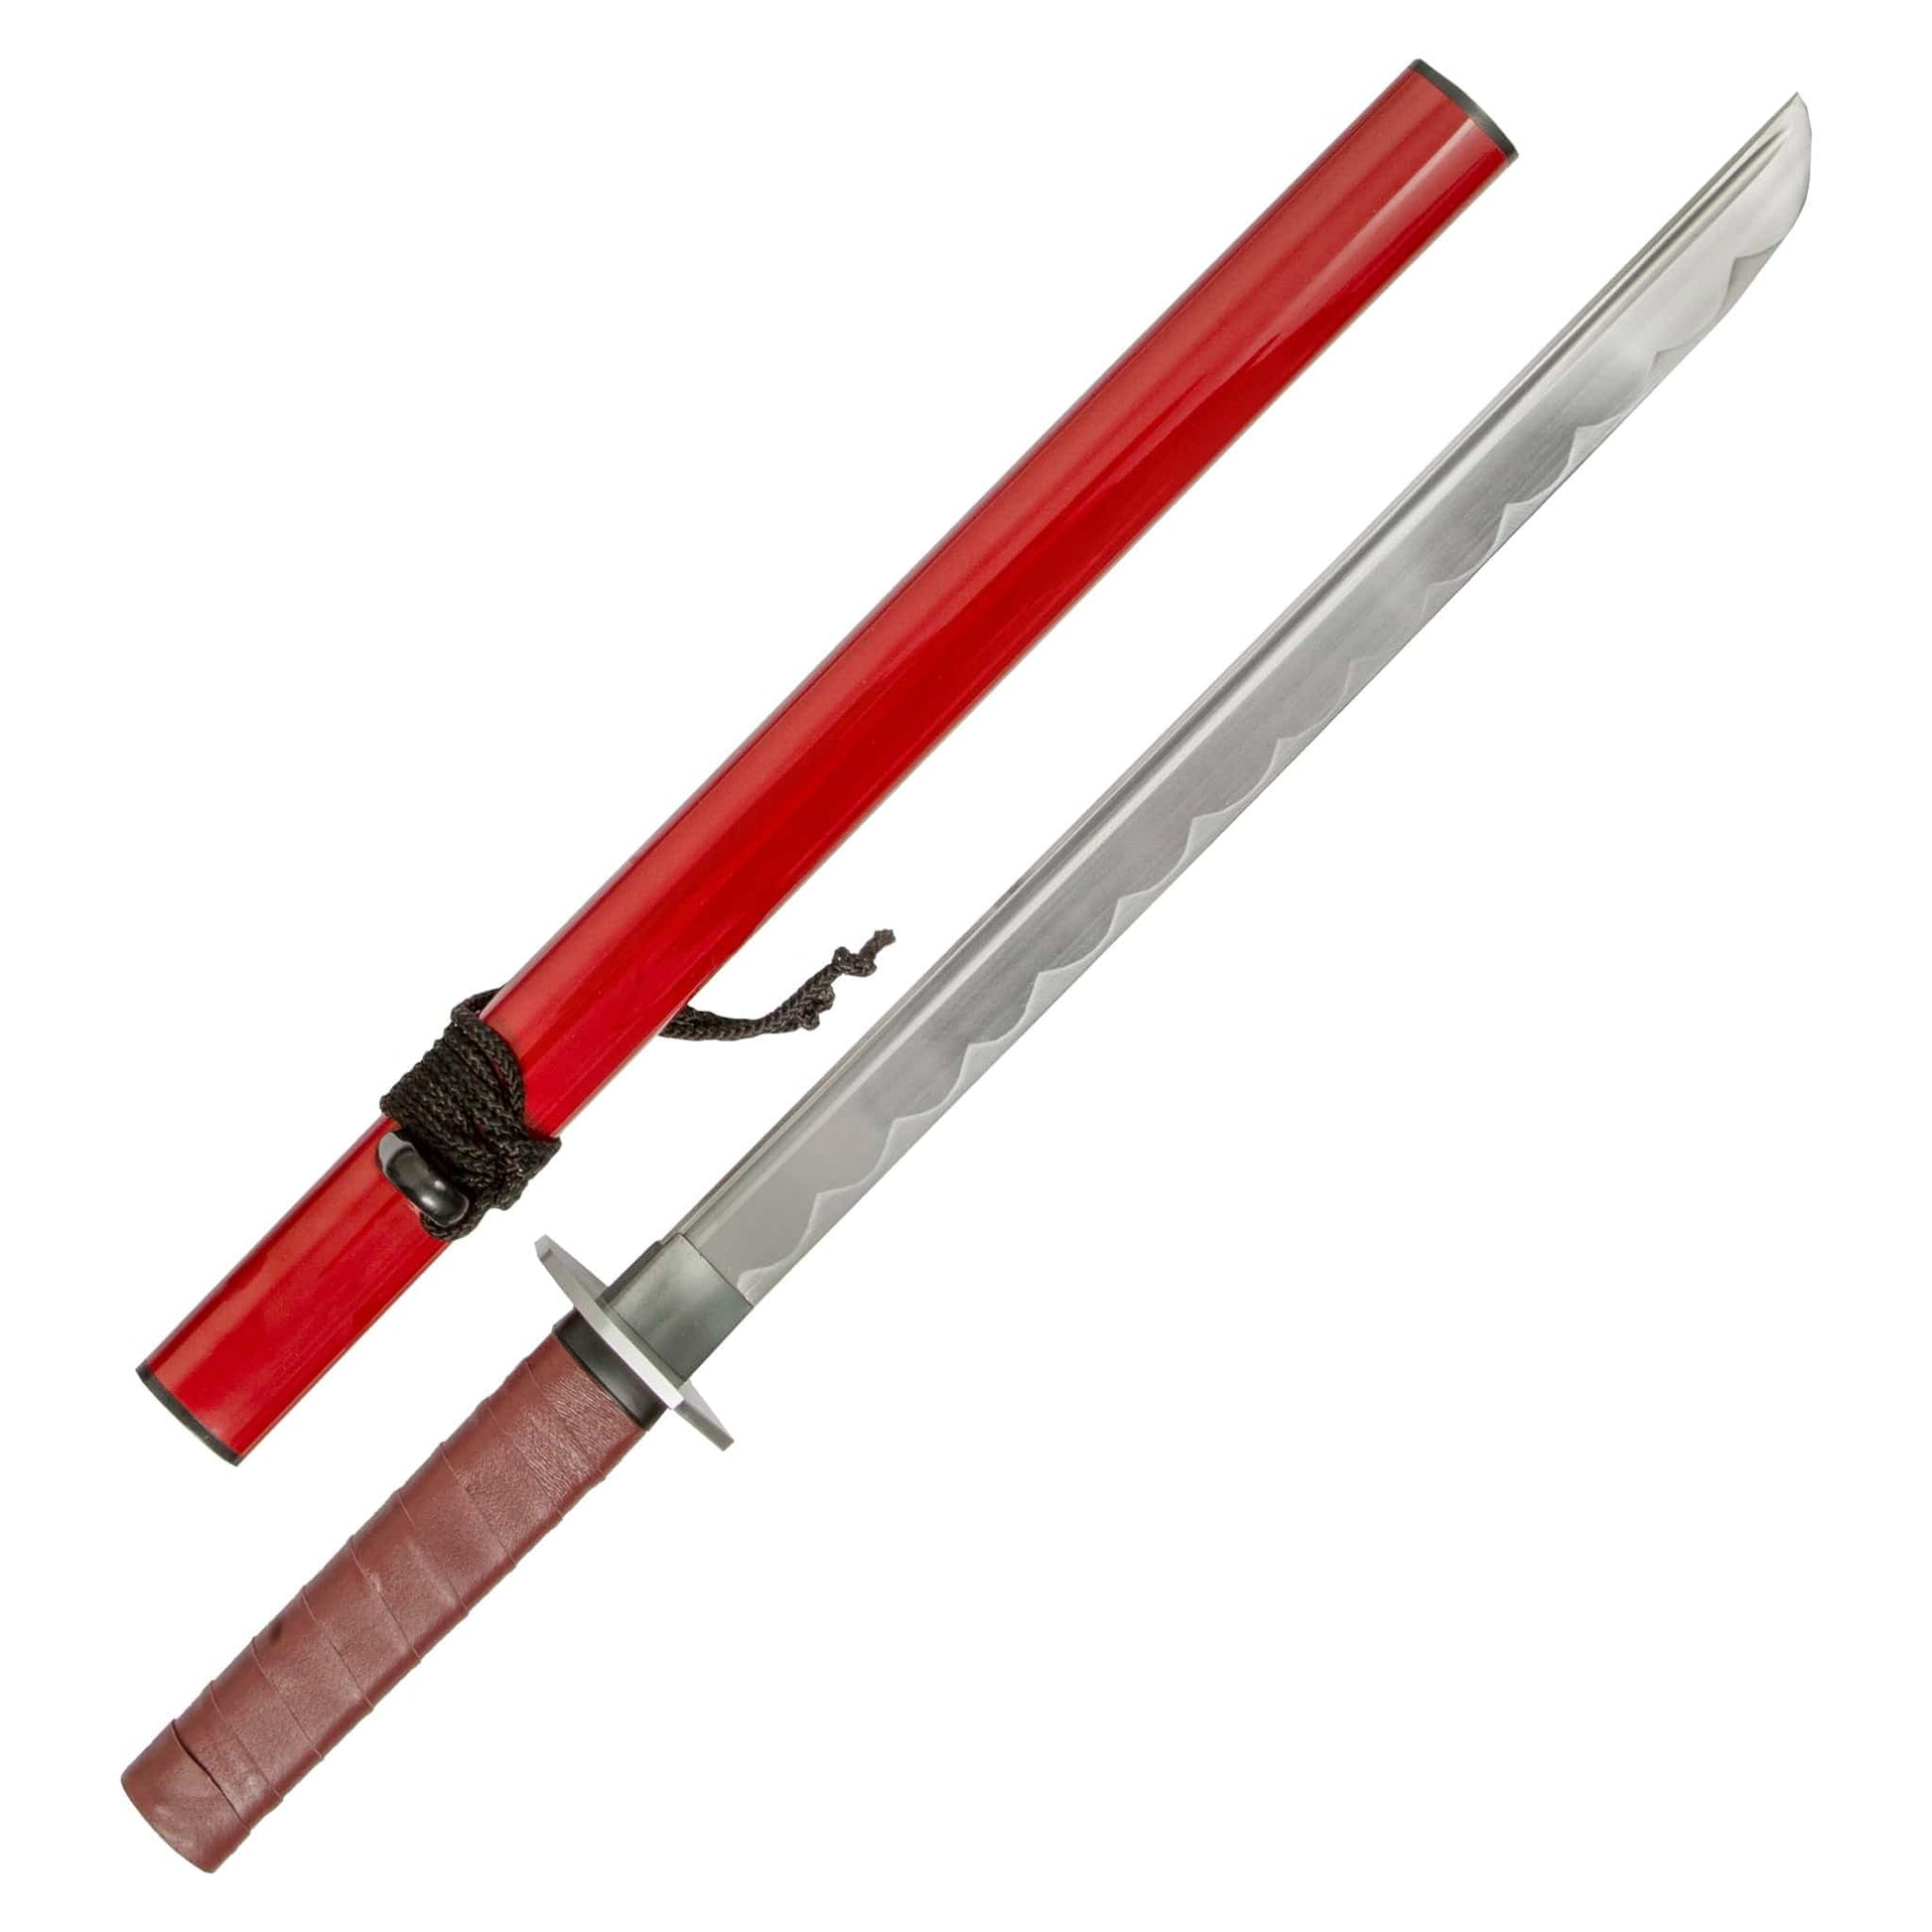 Eclipse Martial Art Supplies sporting goods Red / 26.25 inch Demo Sword Martial Arts Kata Practice